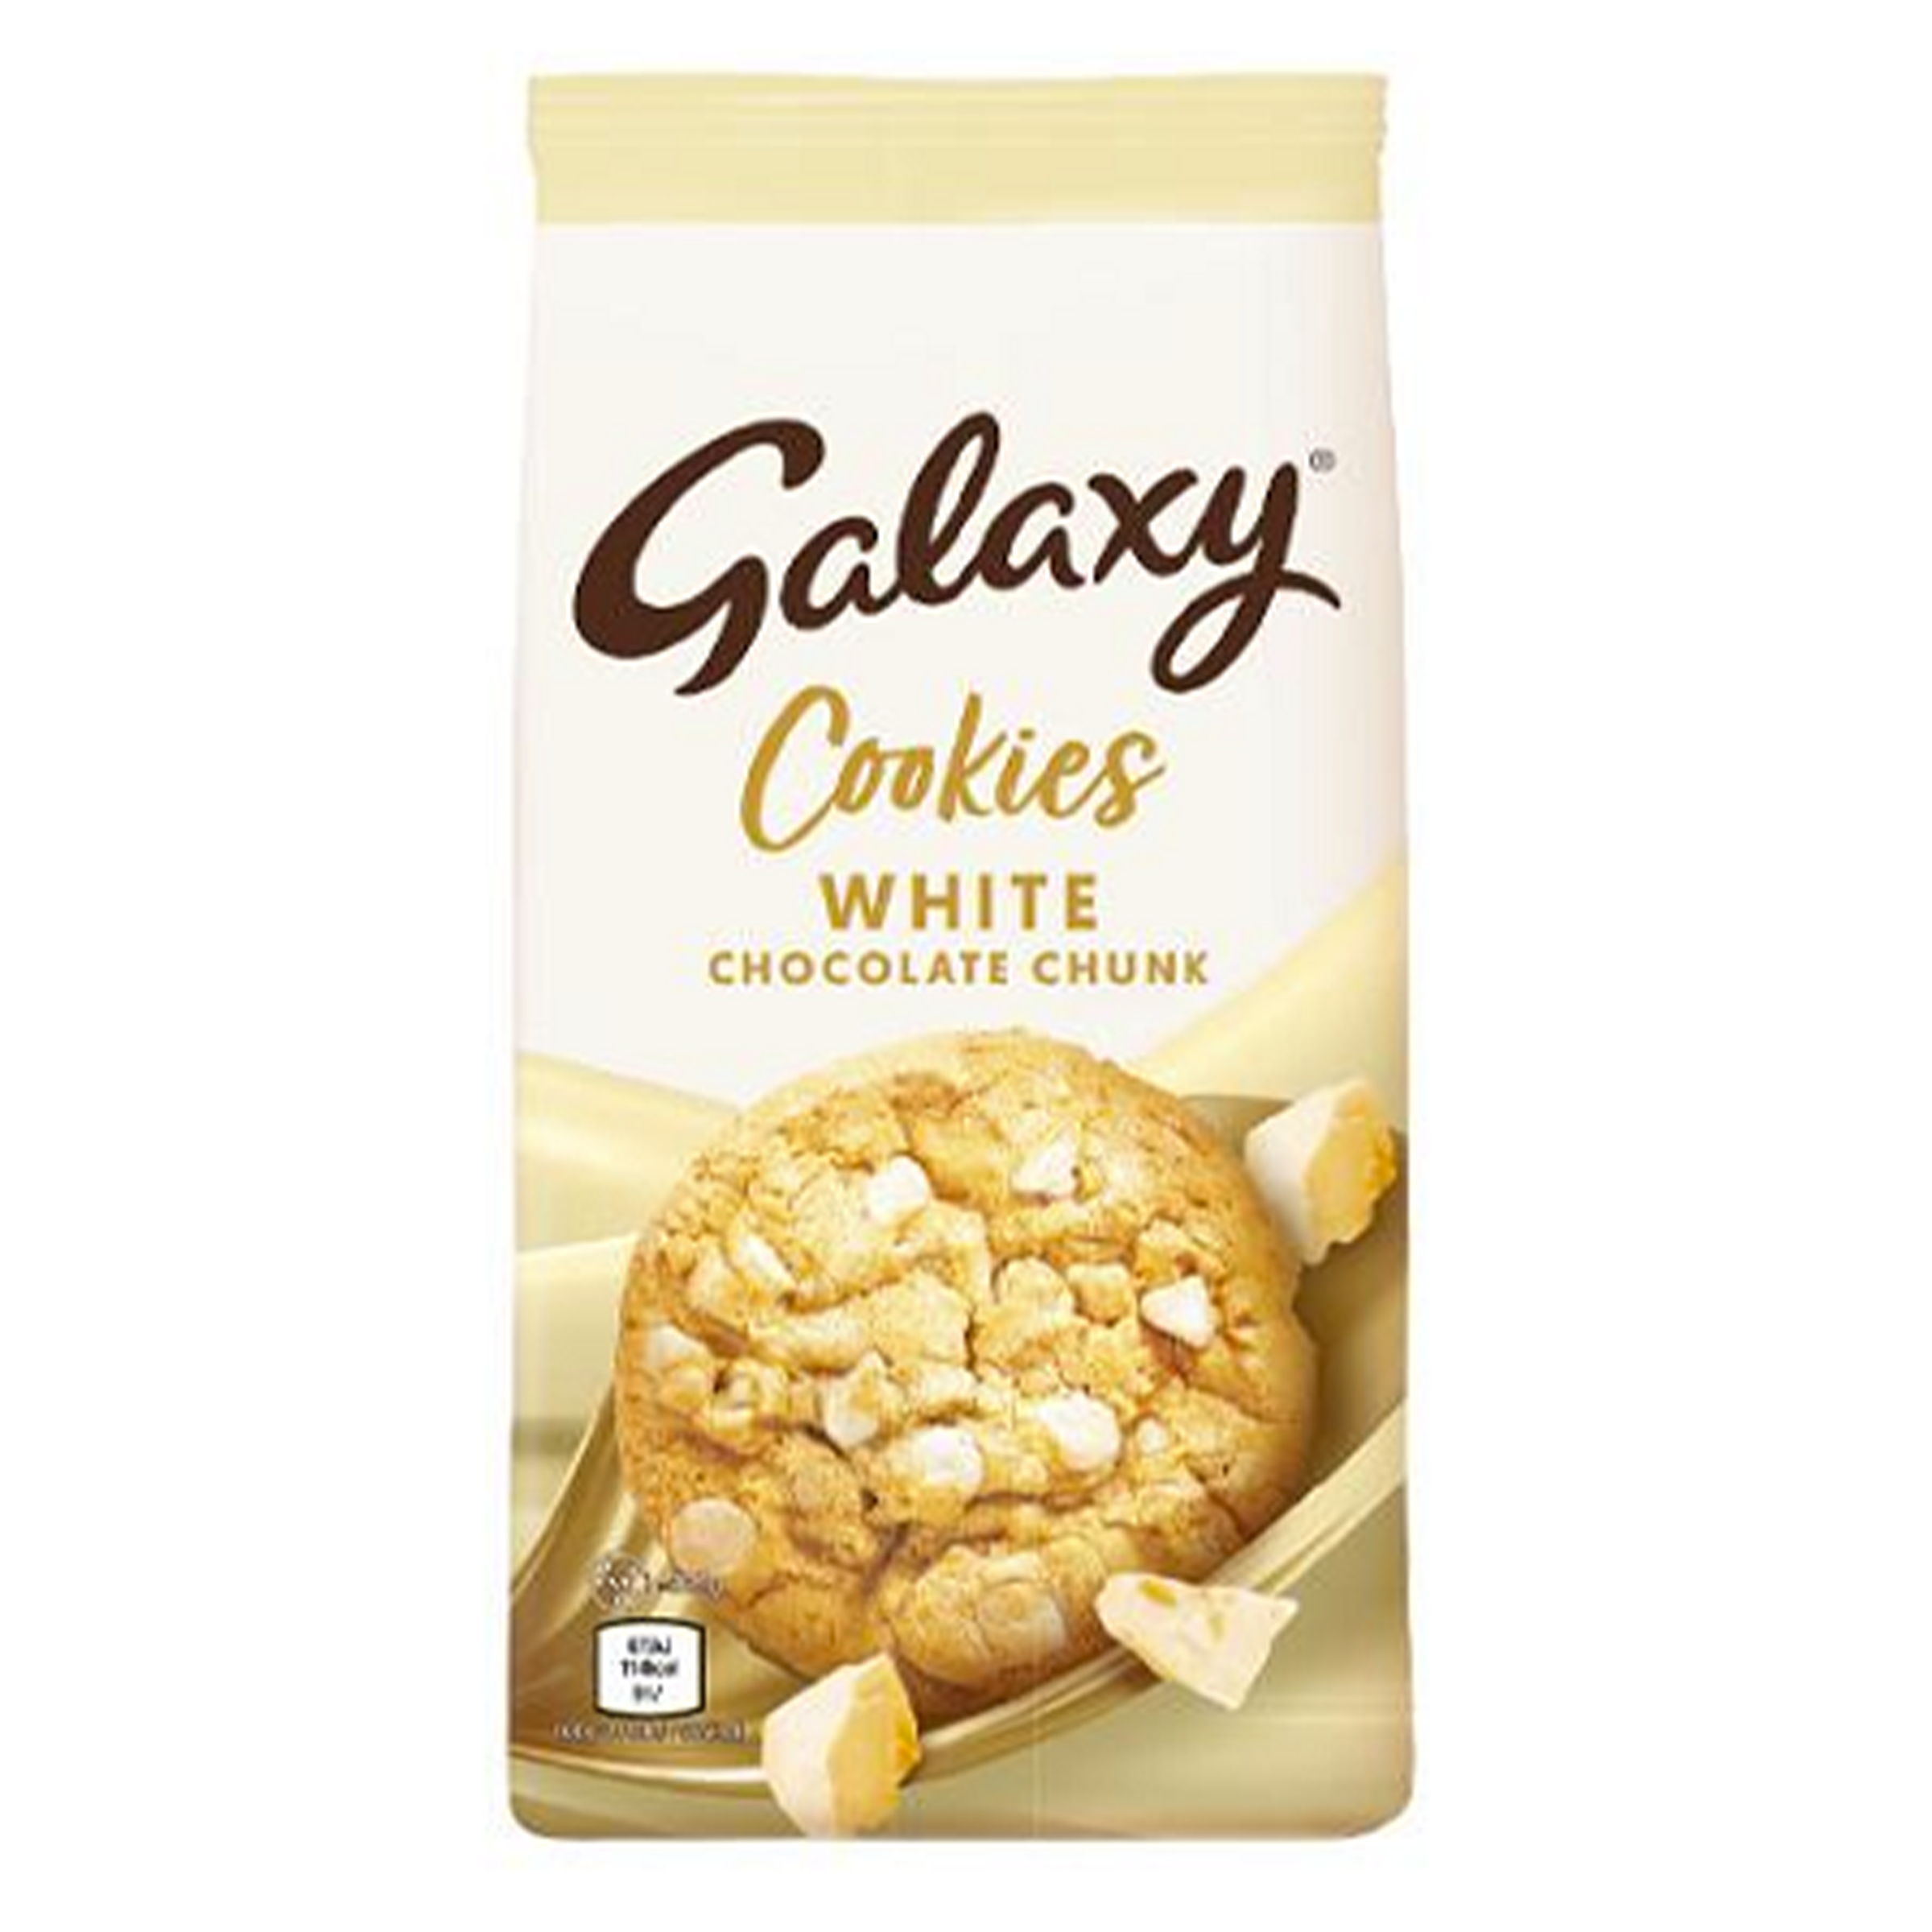 Galaxy Cookies White Chocolate Chunk (Europe)